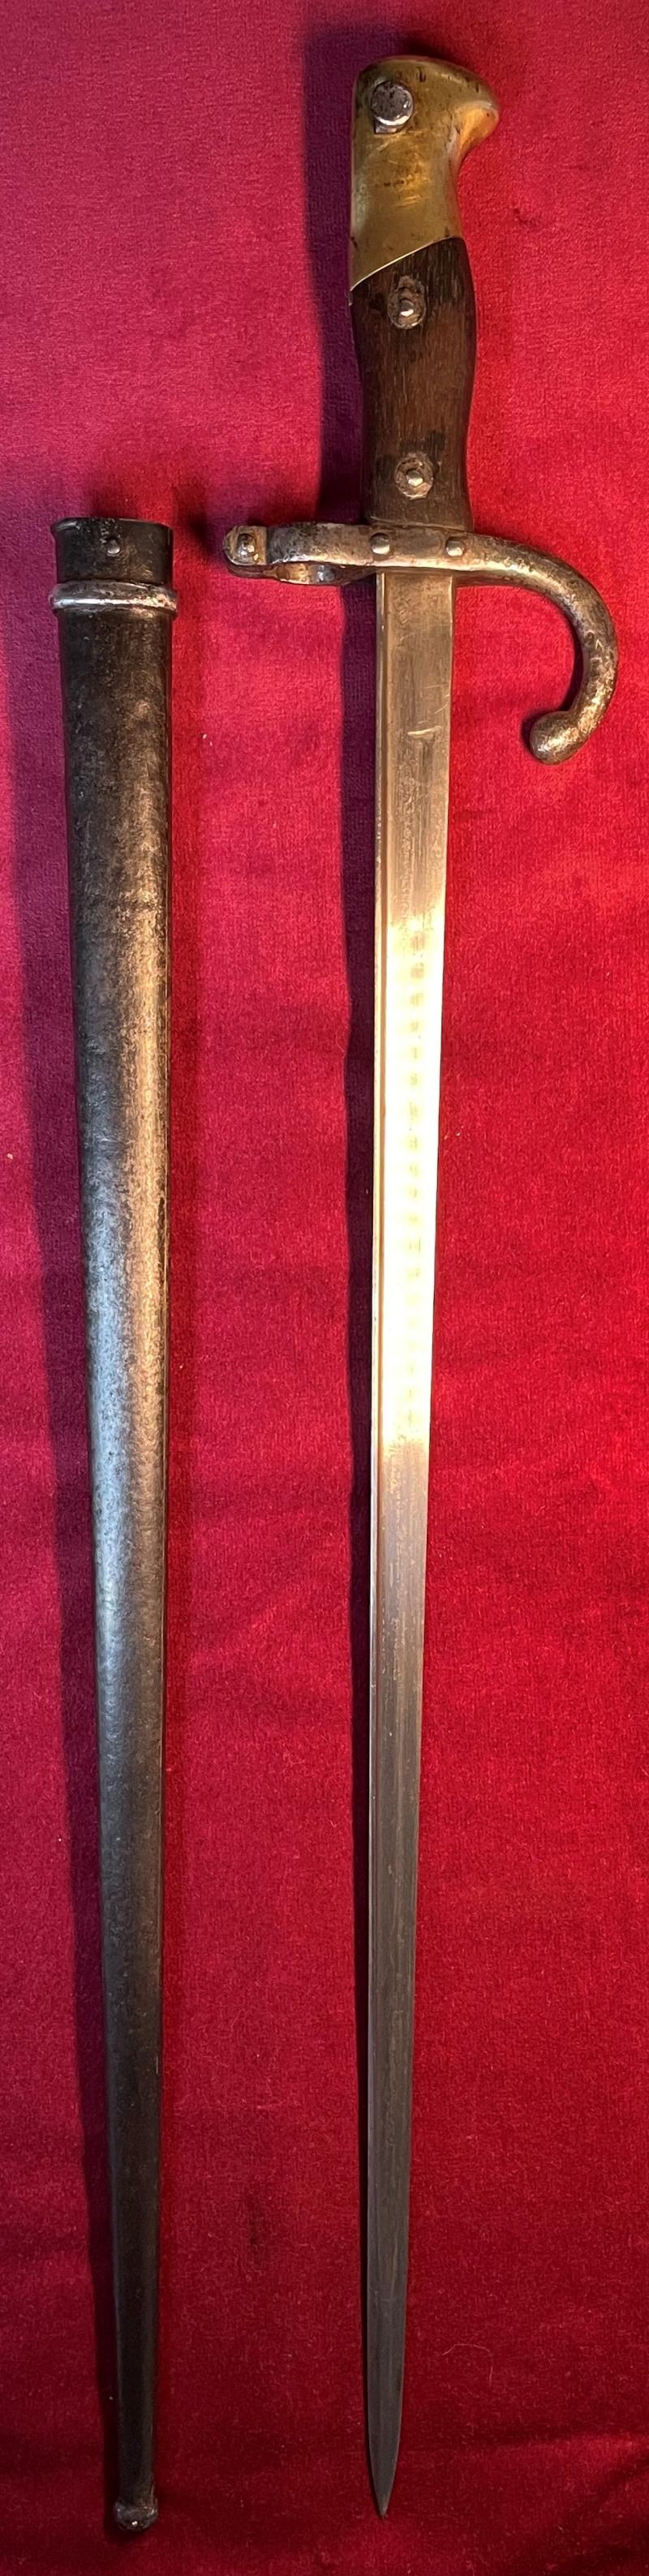 M1874 French Gras sword Bayonet - St. Etienne 1877